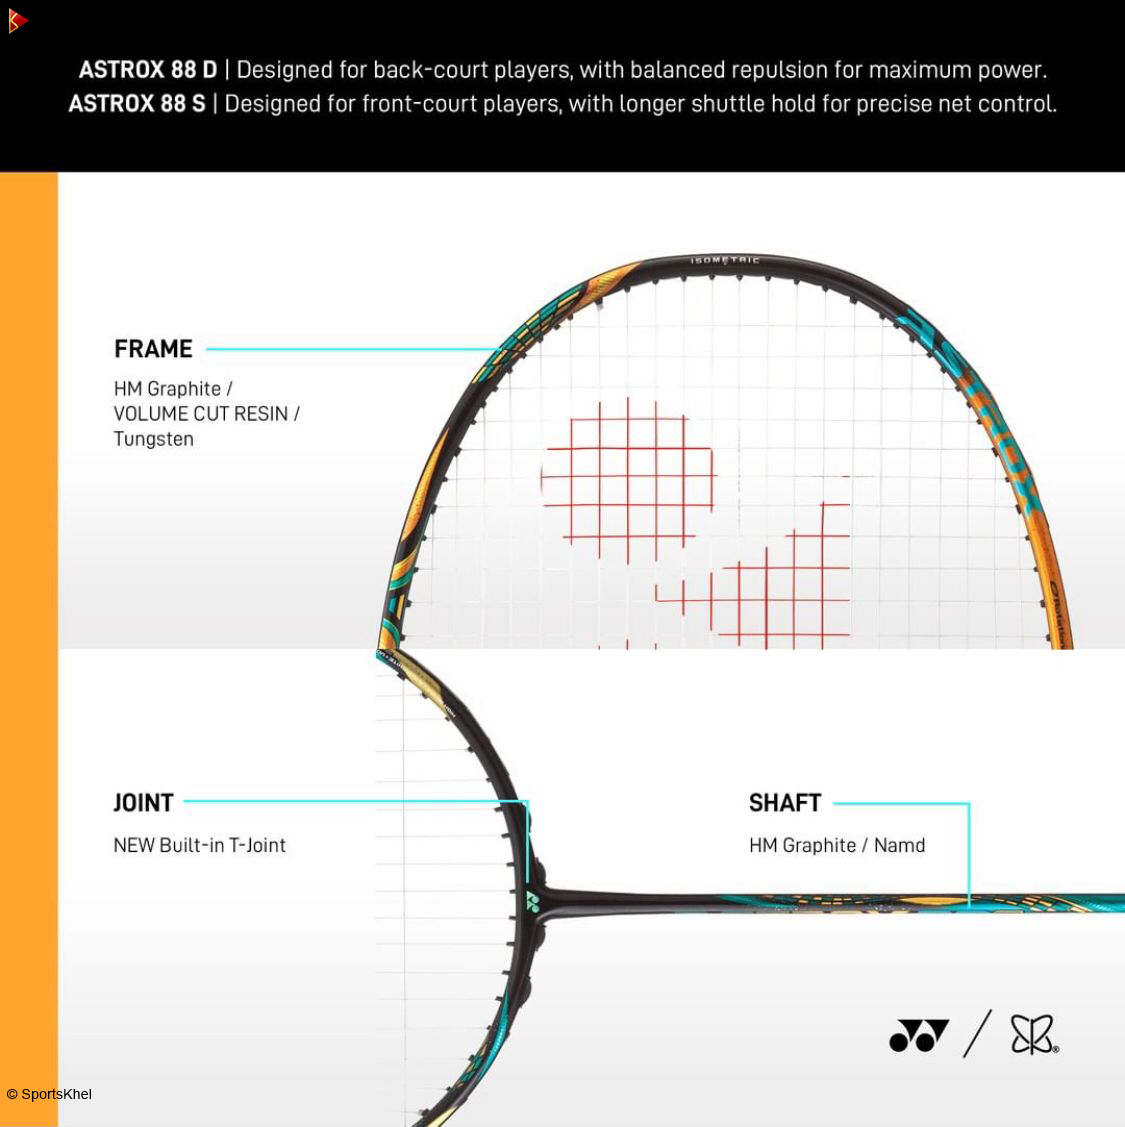 Yonex Astrox 88S Pro Badminton Racket Features